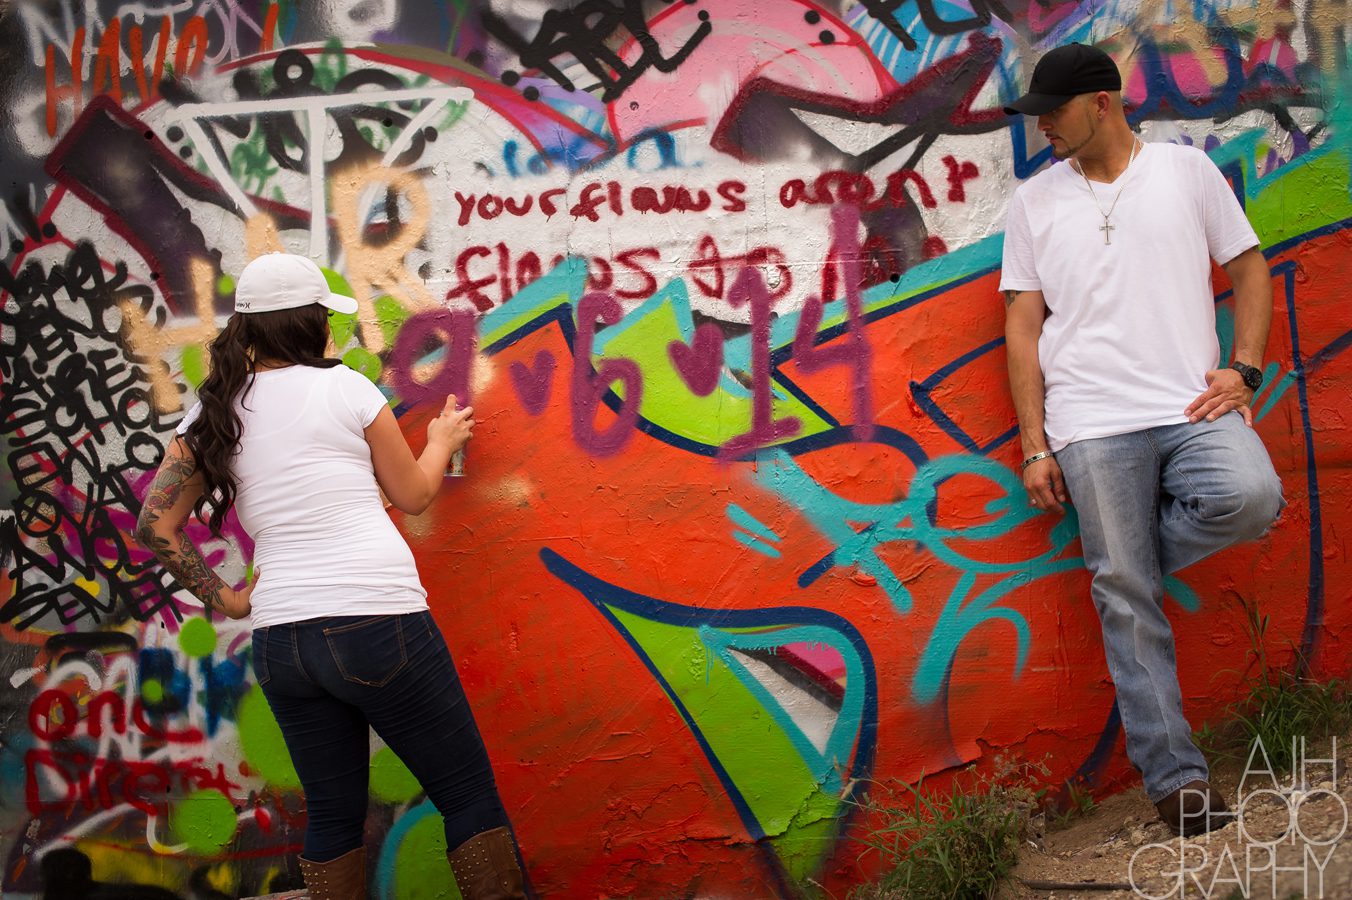 Graffiti engagement photos - AJH Photography